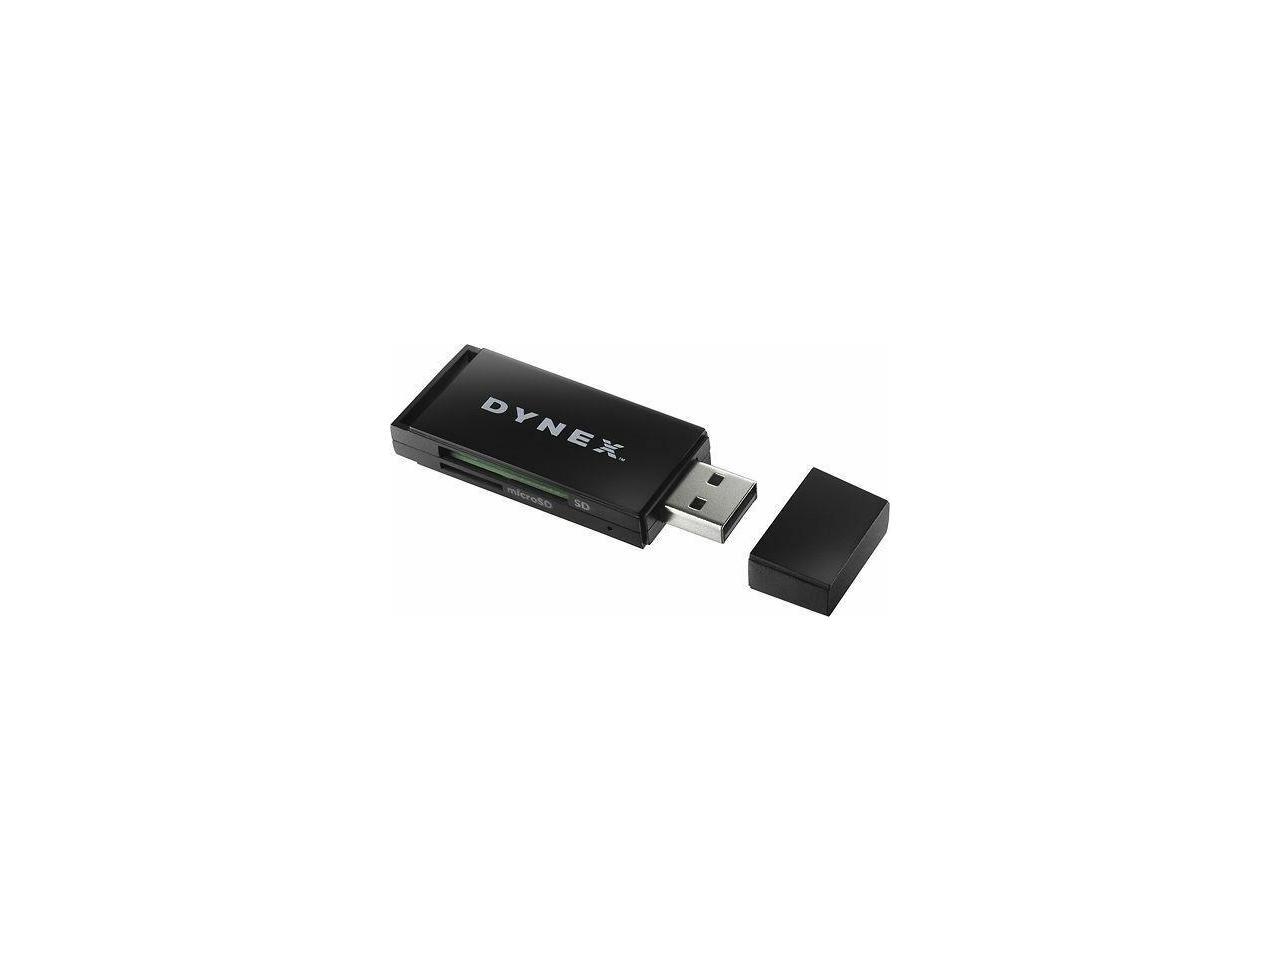 Dynex USB 2.0 2-in-1 Memory Card Reader DX-CR112 